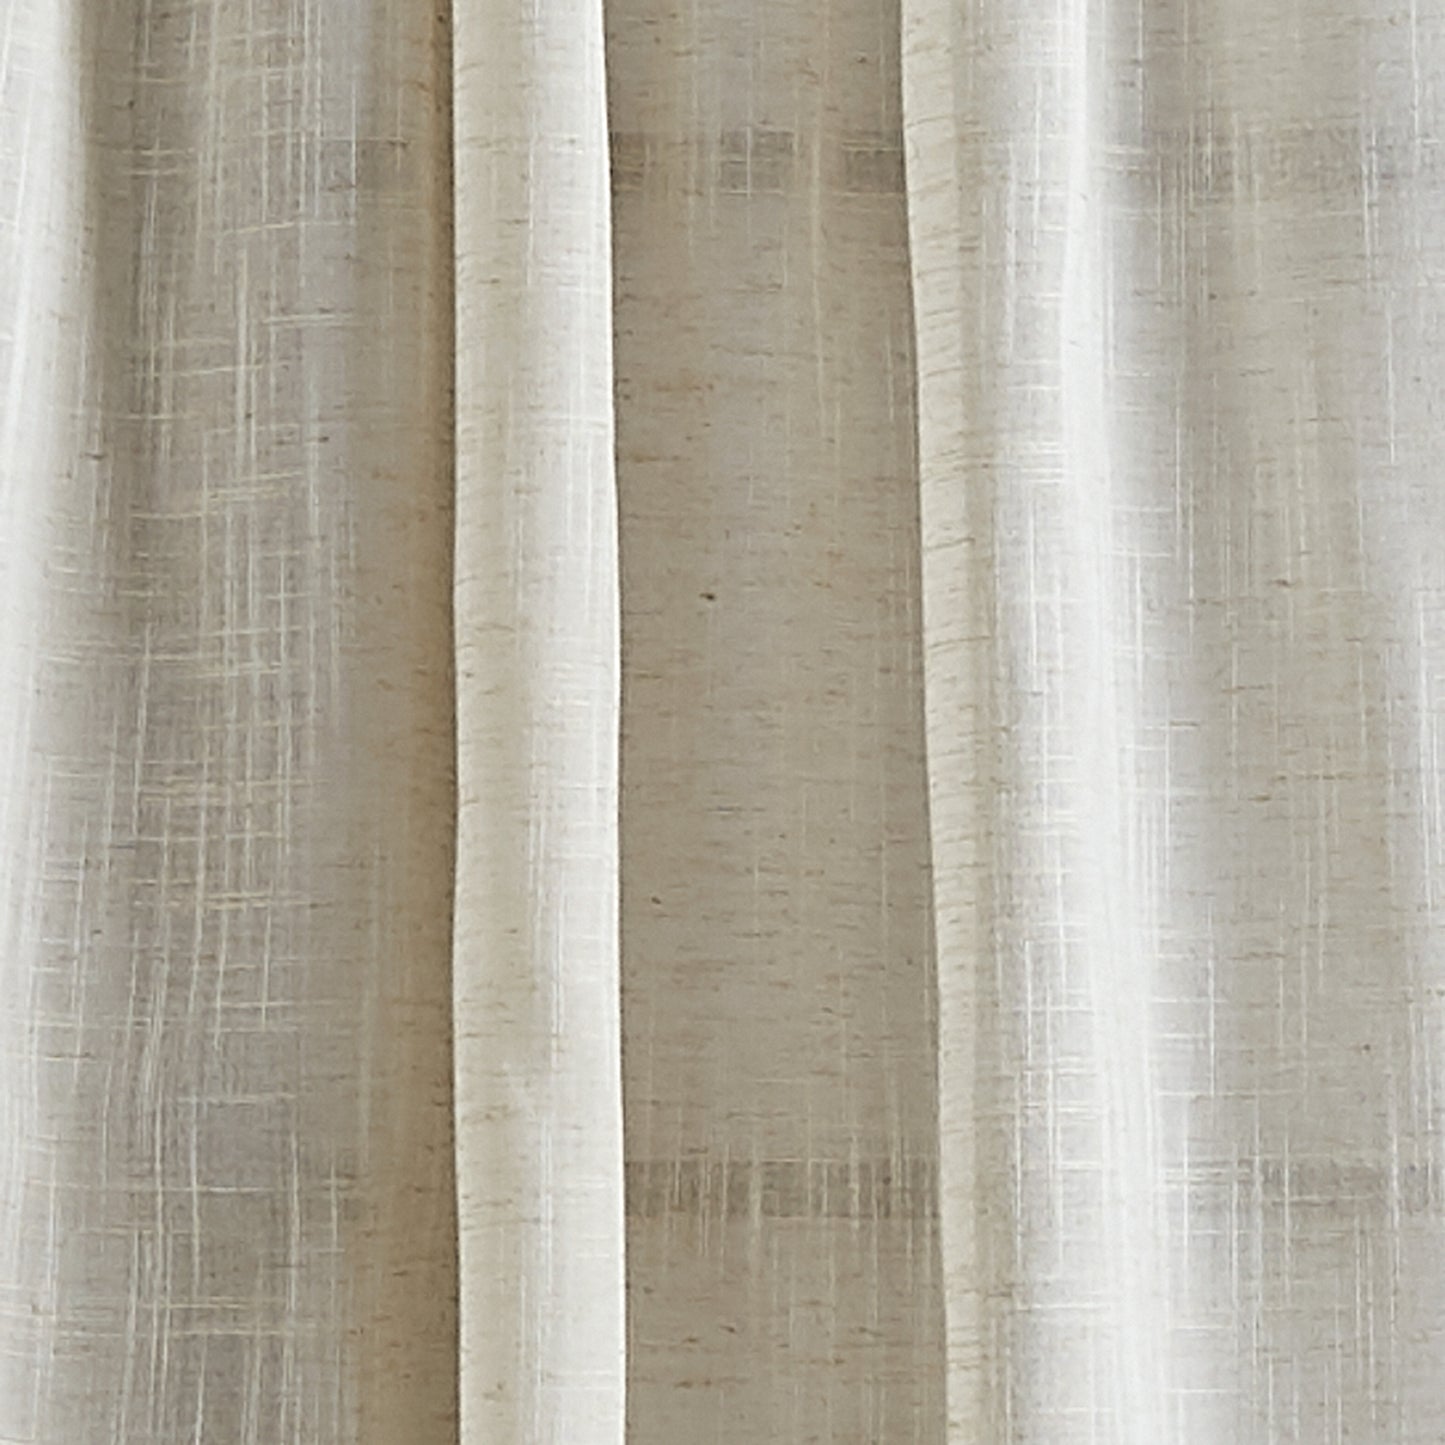 DKNY Classic Linen Panel Pair